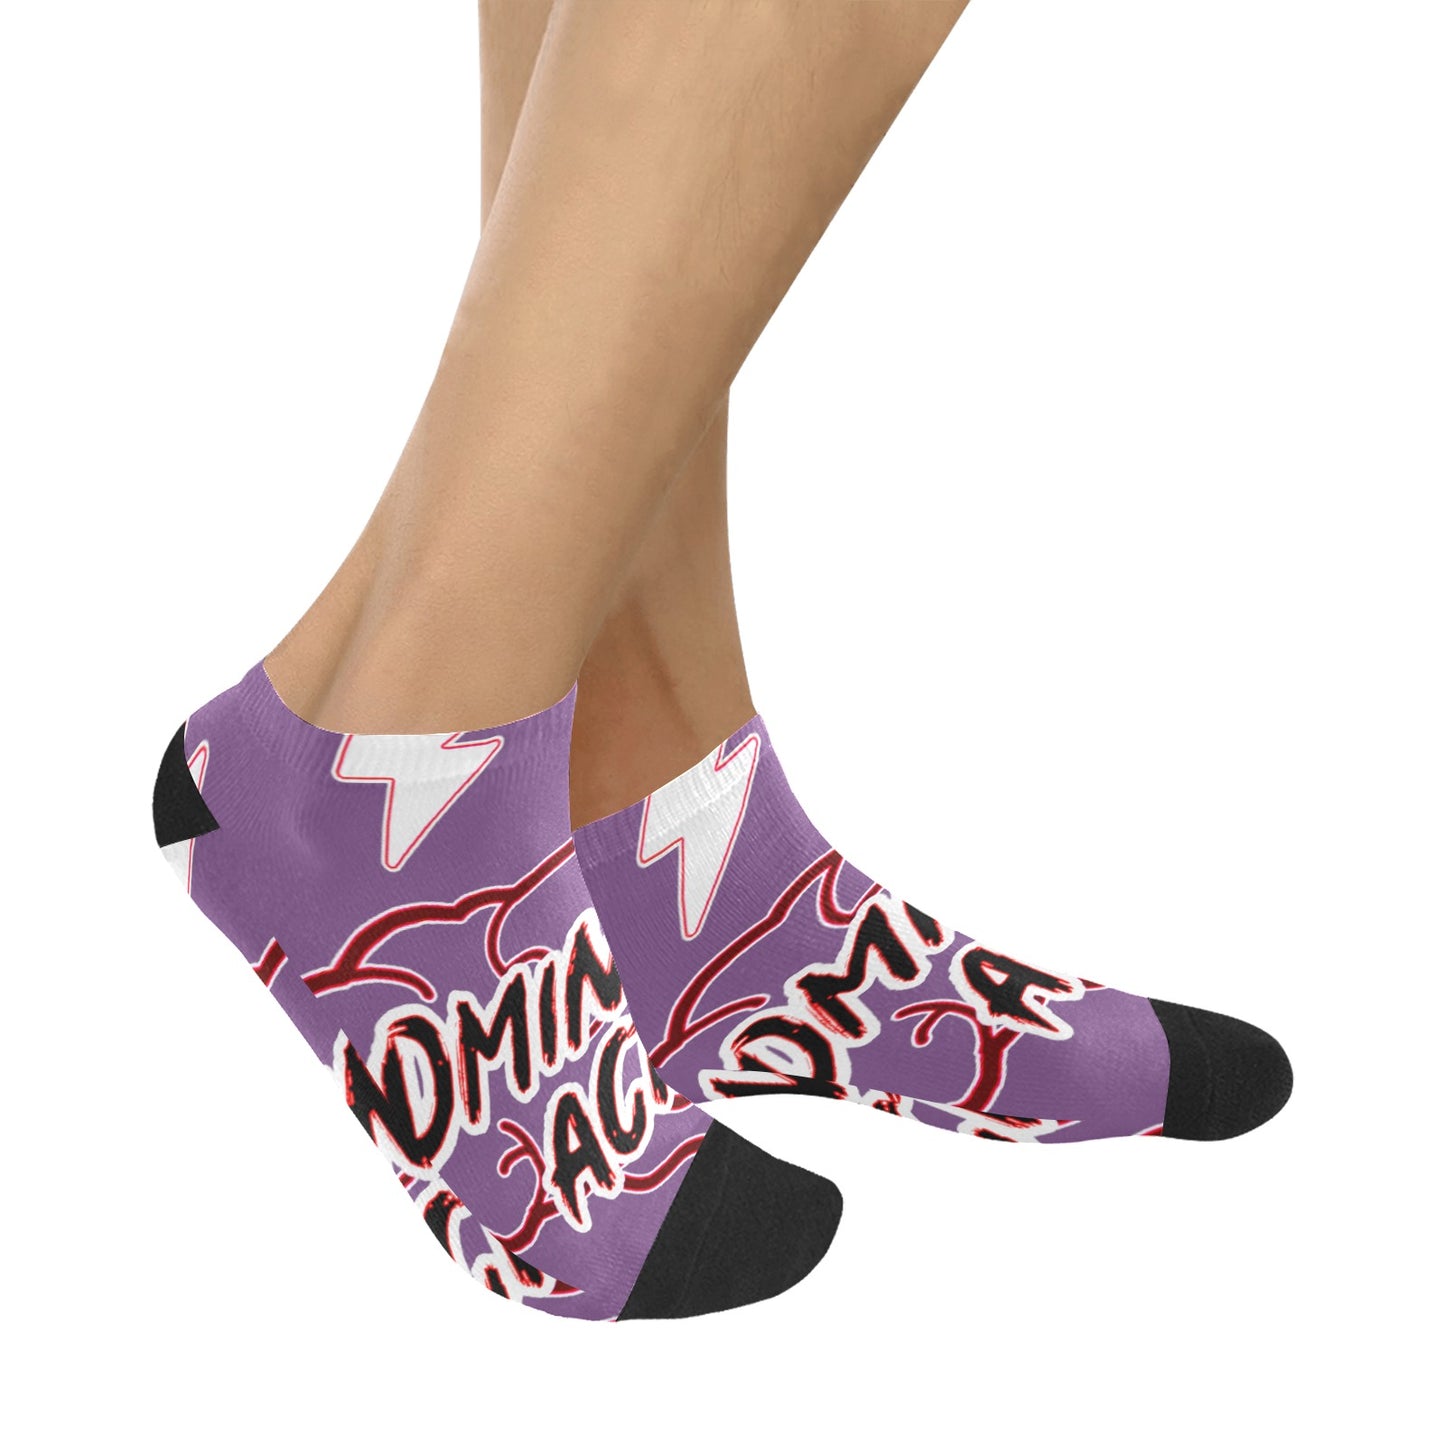 fz men's mind ankle socks one size / fz mind socks - purple men's ankle socks